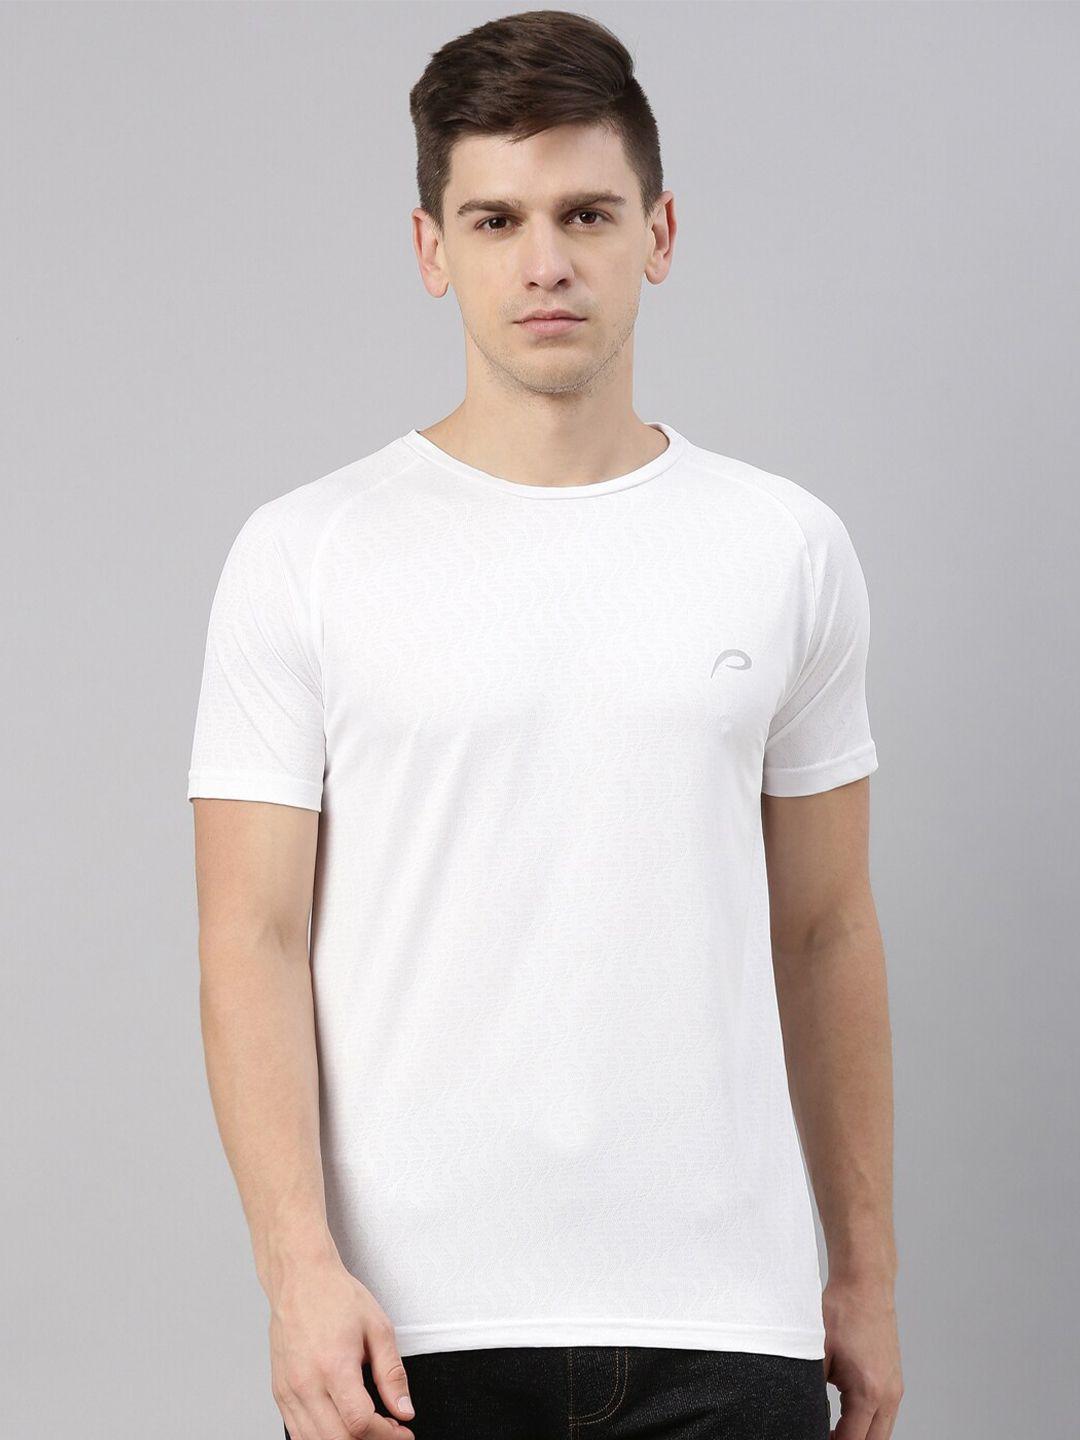 proline round neck short sleeves cotton t-shirt